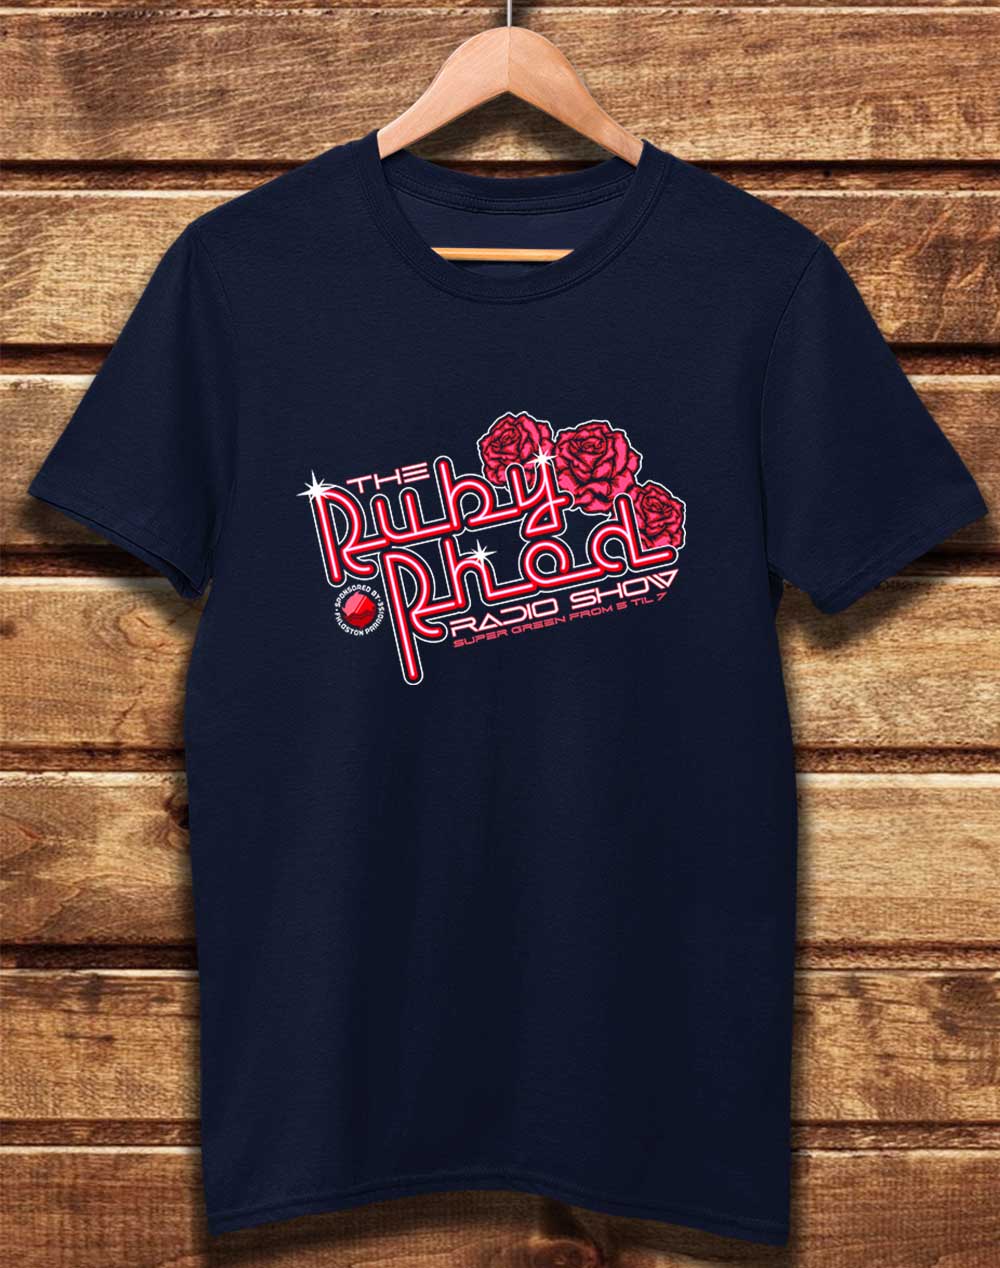 Navy - DELUXE Ruby Rhod Radio Show Organic Cotton T-Shirt